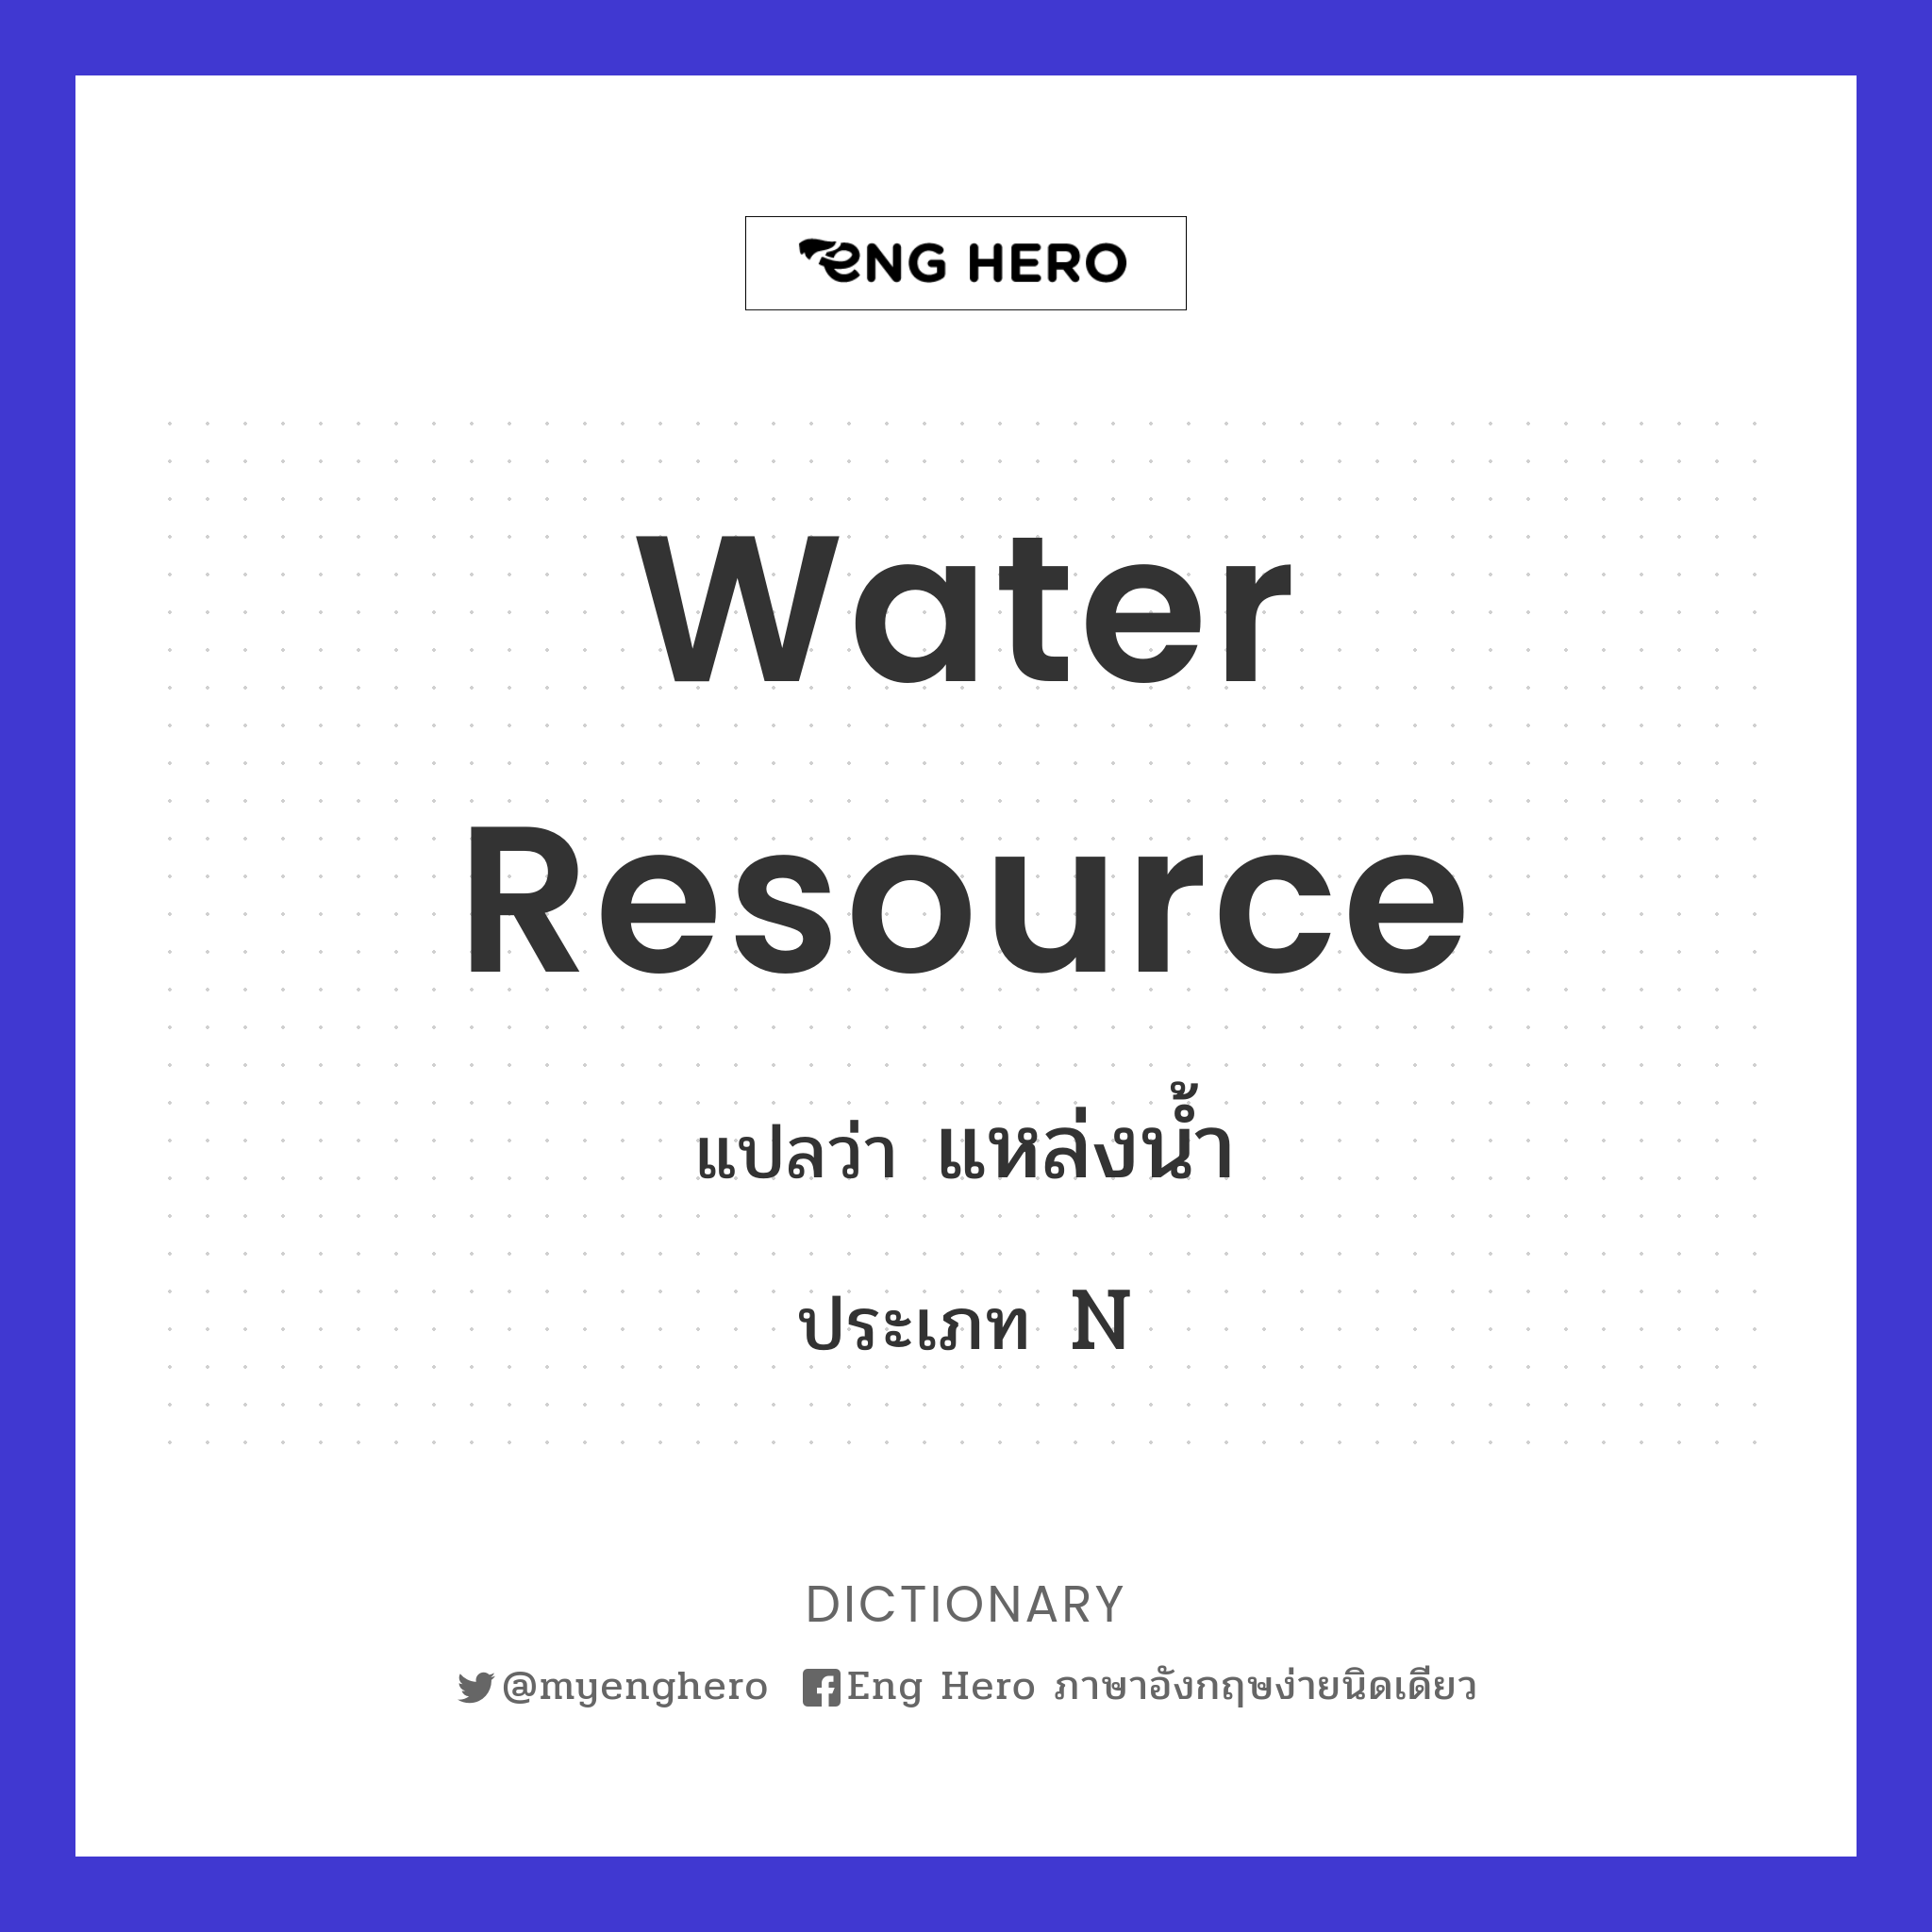 water resource